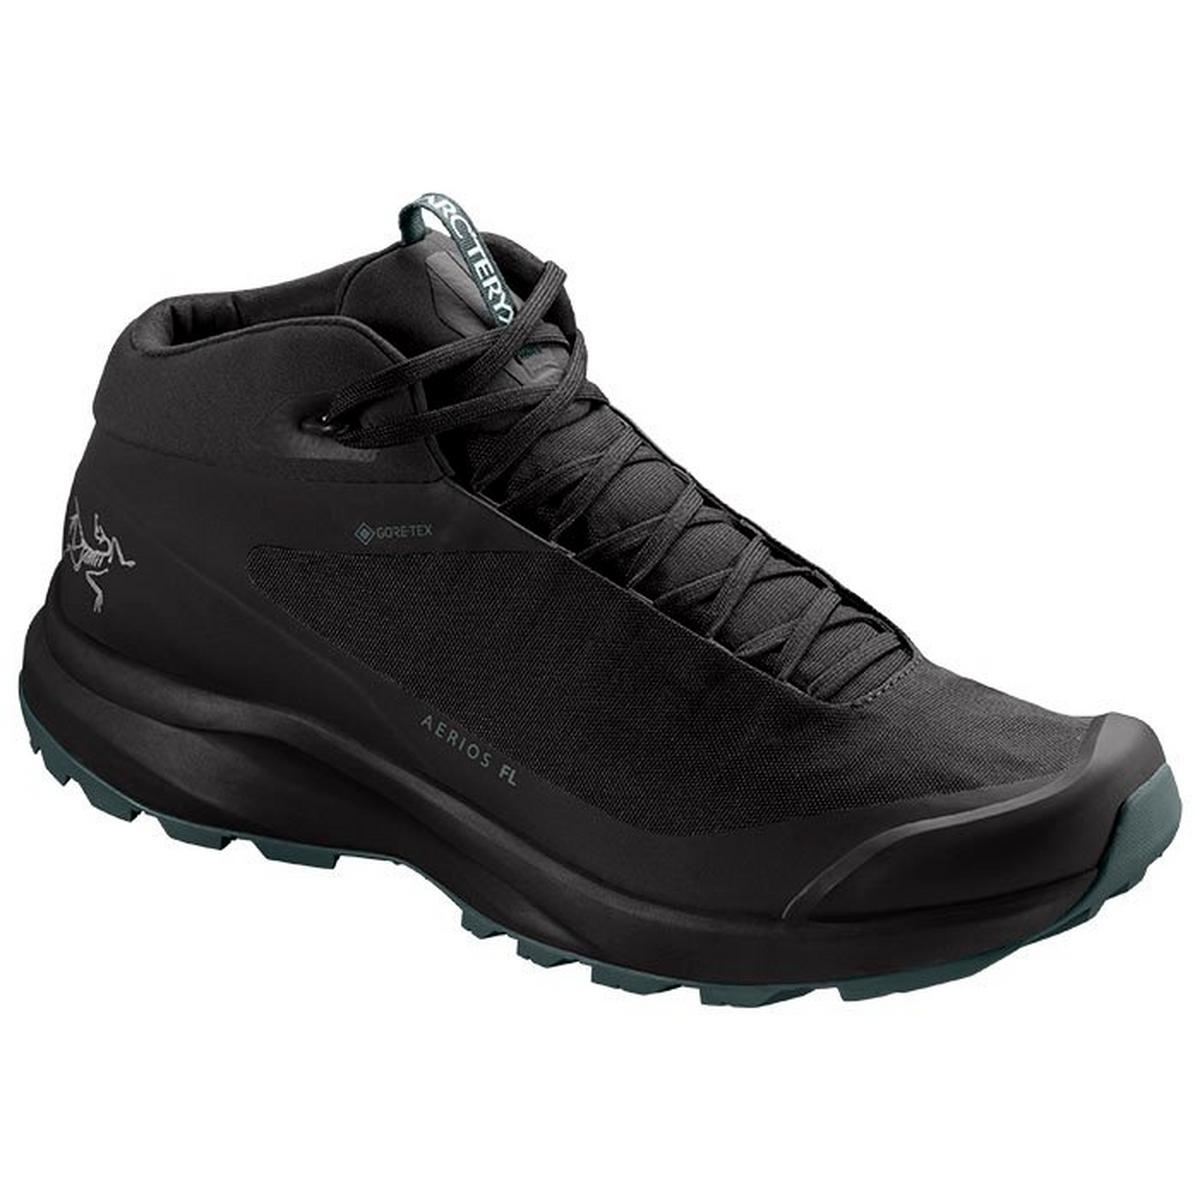 Men's Aerios FL Mid GTX Hiking Shoe